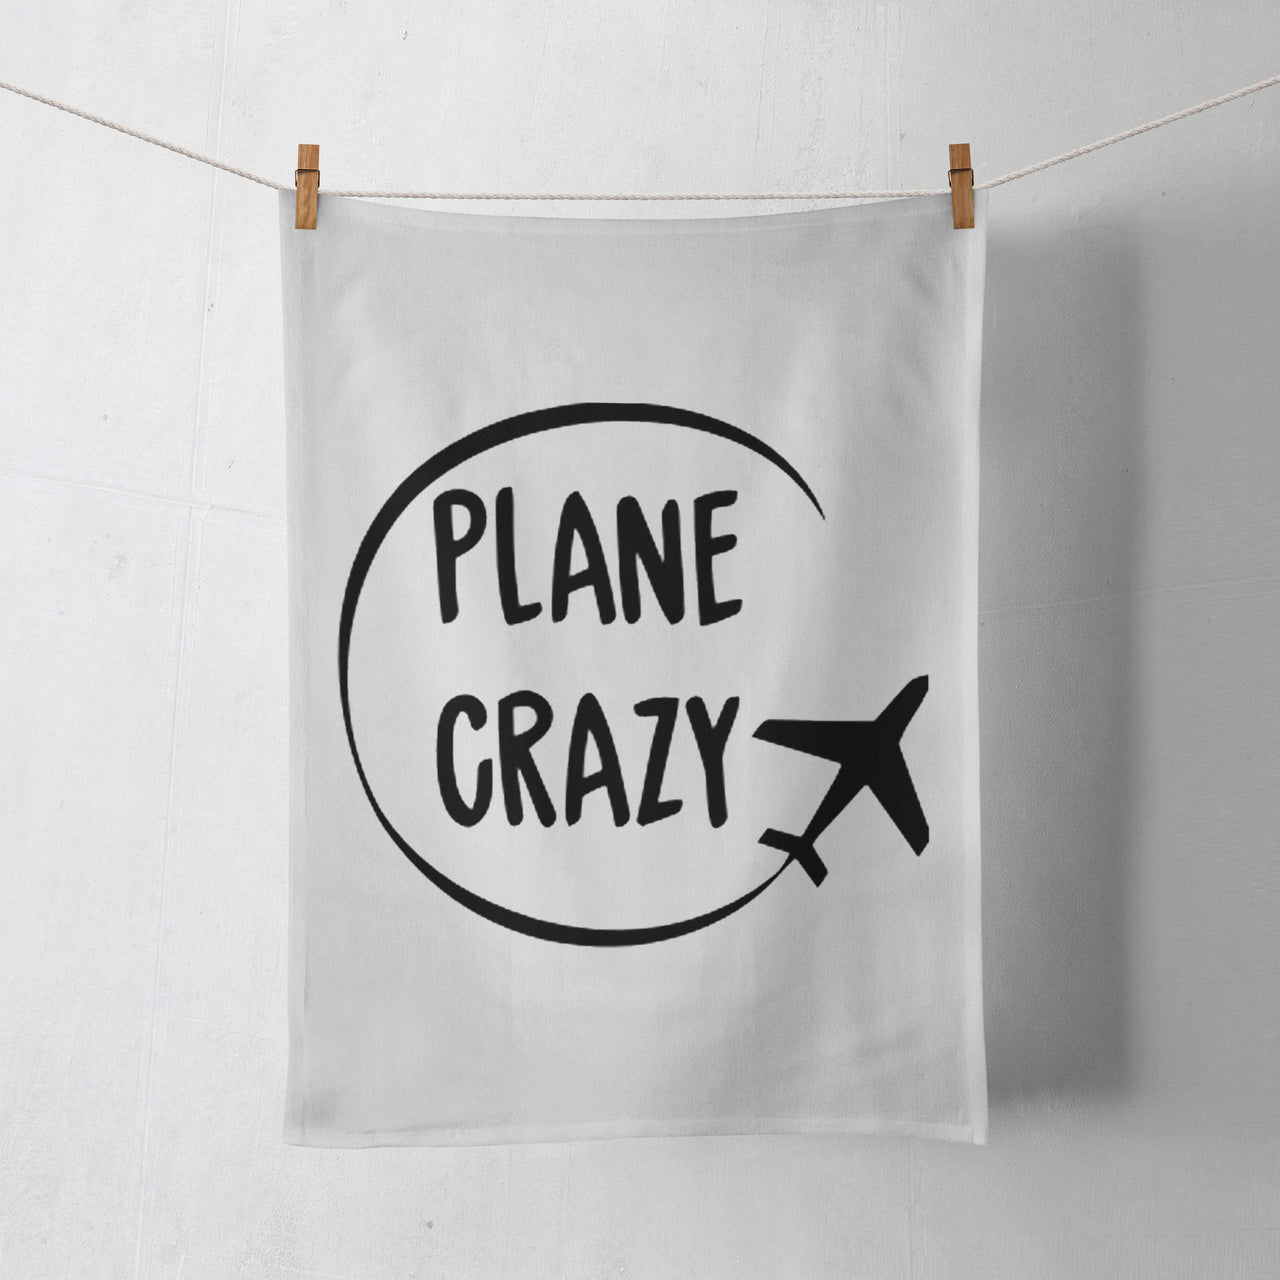 Plane Crazy Designed Towels